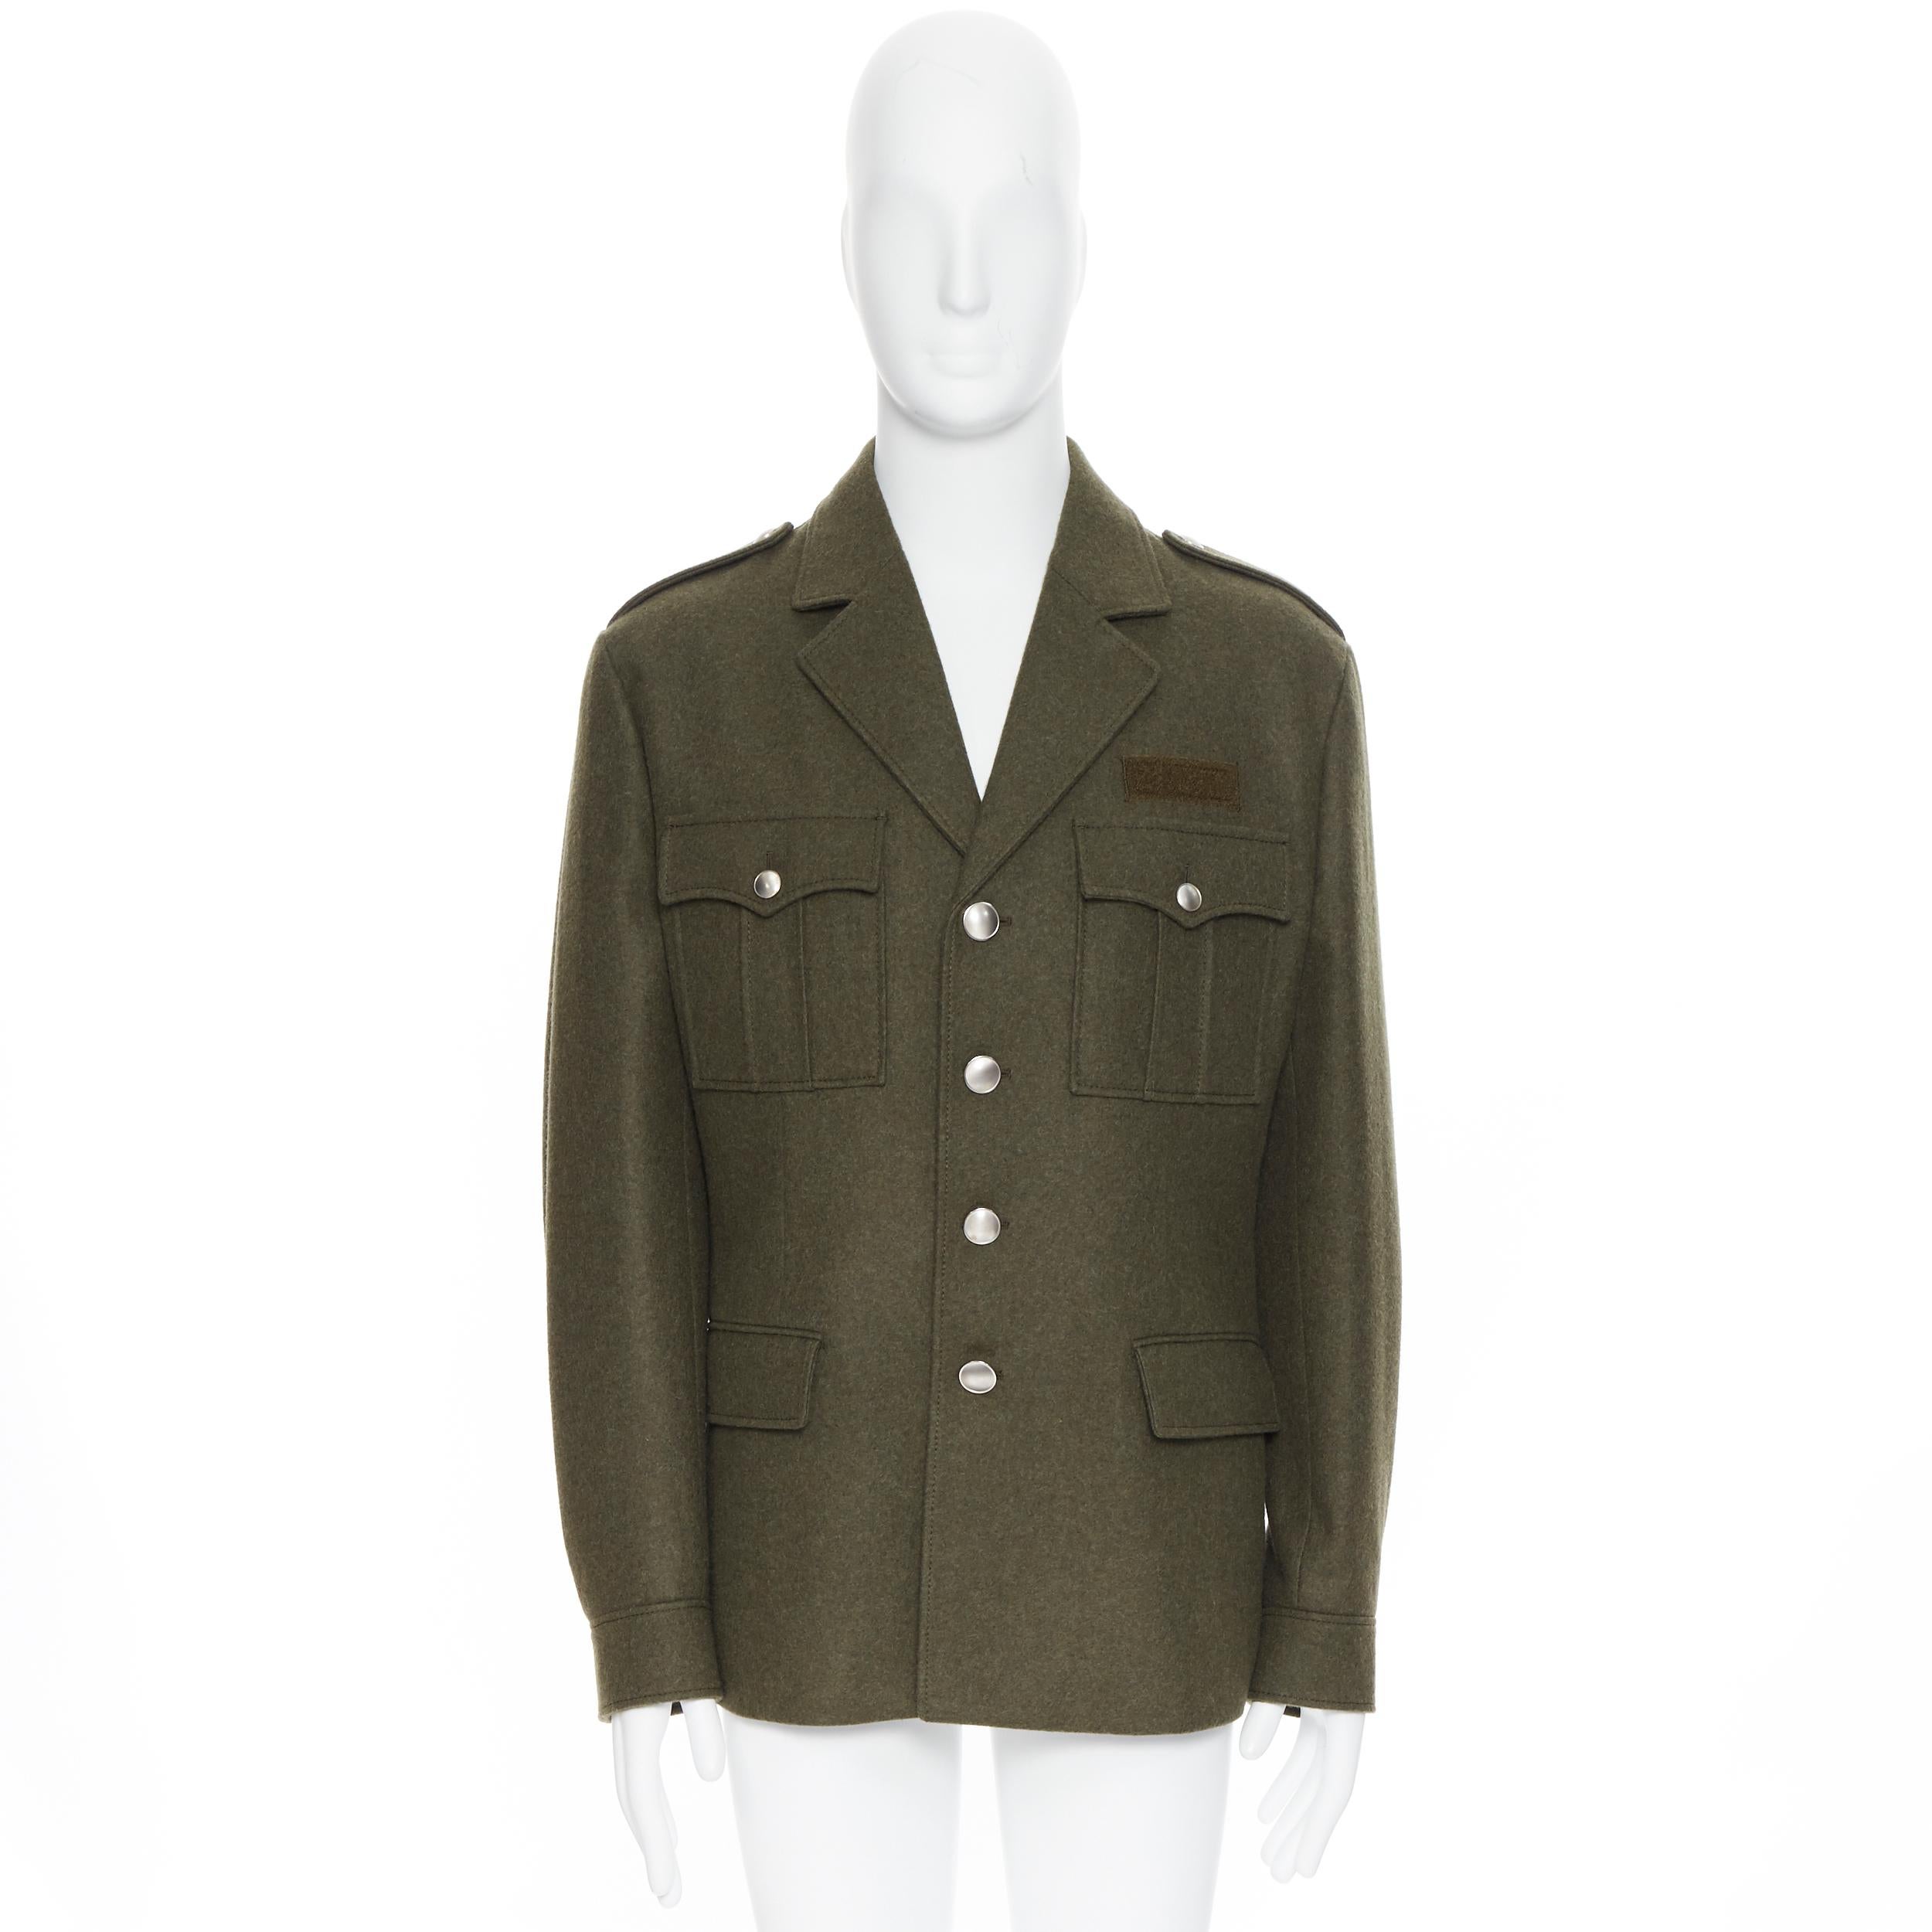 Black new PRADA 2019 Runway 100% virgin wool green military pocket jacket coat IT50 L